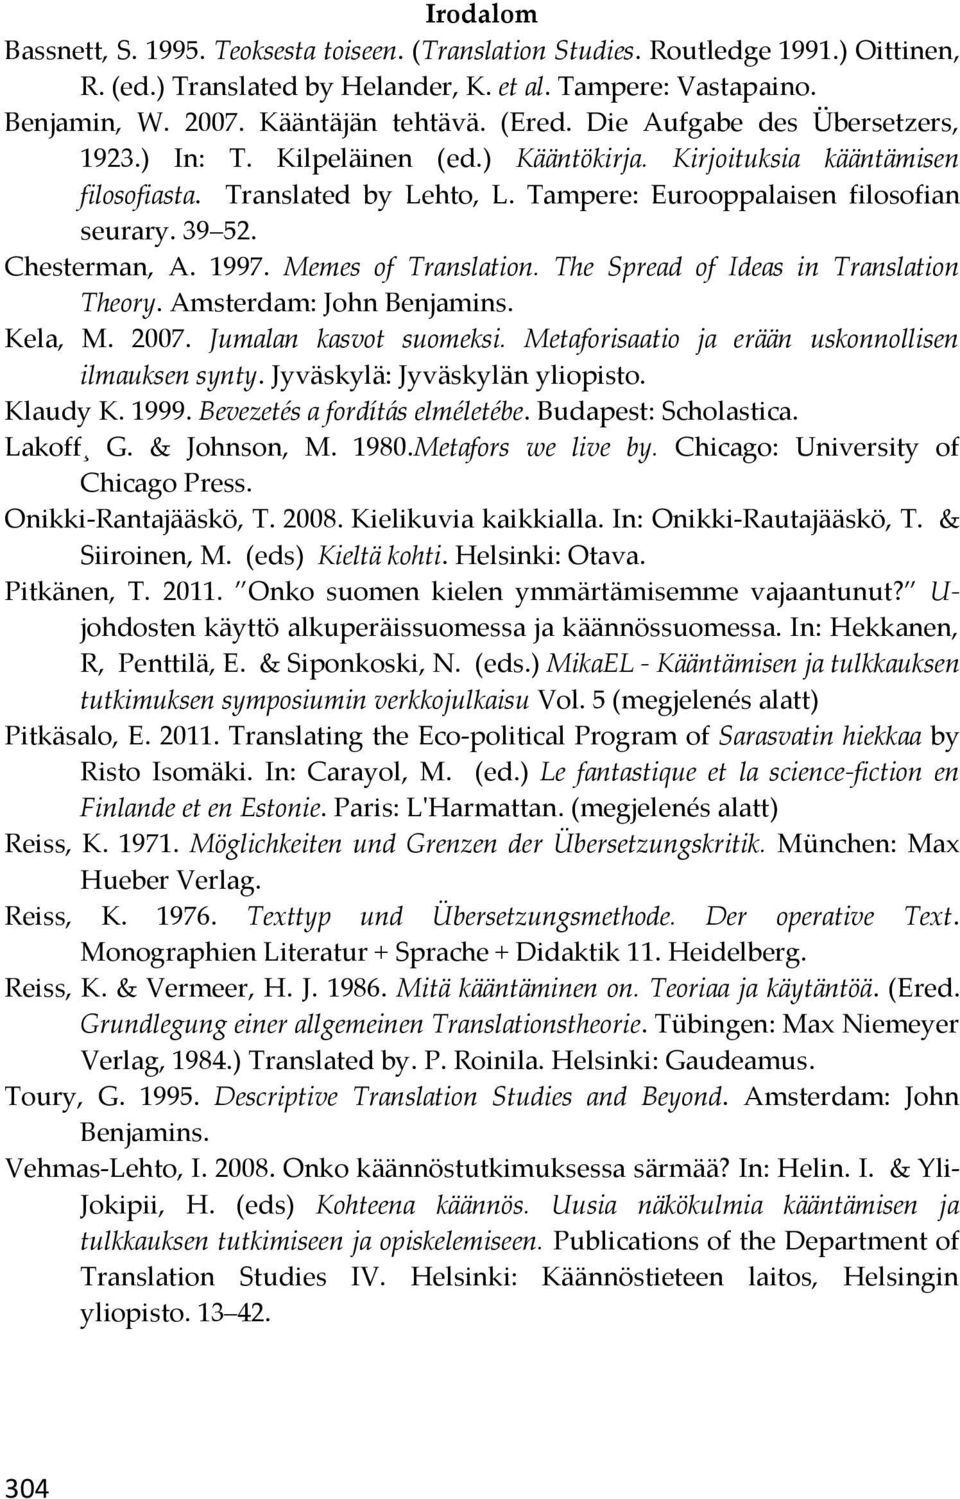 Chesterman, A. 1997. Memes of Translation. The Spread of Ideas in Translation Theory. Amsterdam: John Benjamins. Kela, M. 2007. Jumalan kasvot suomeksi.